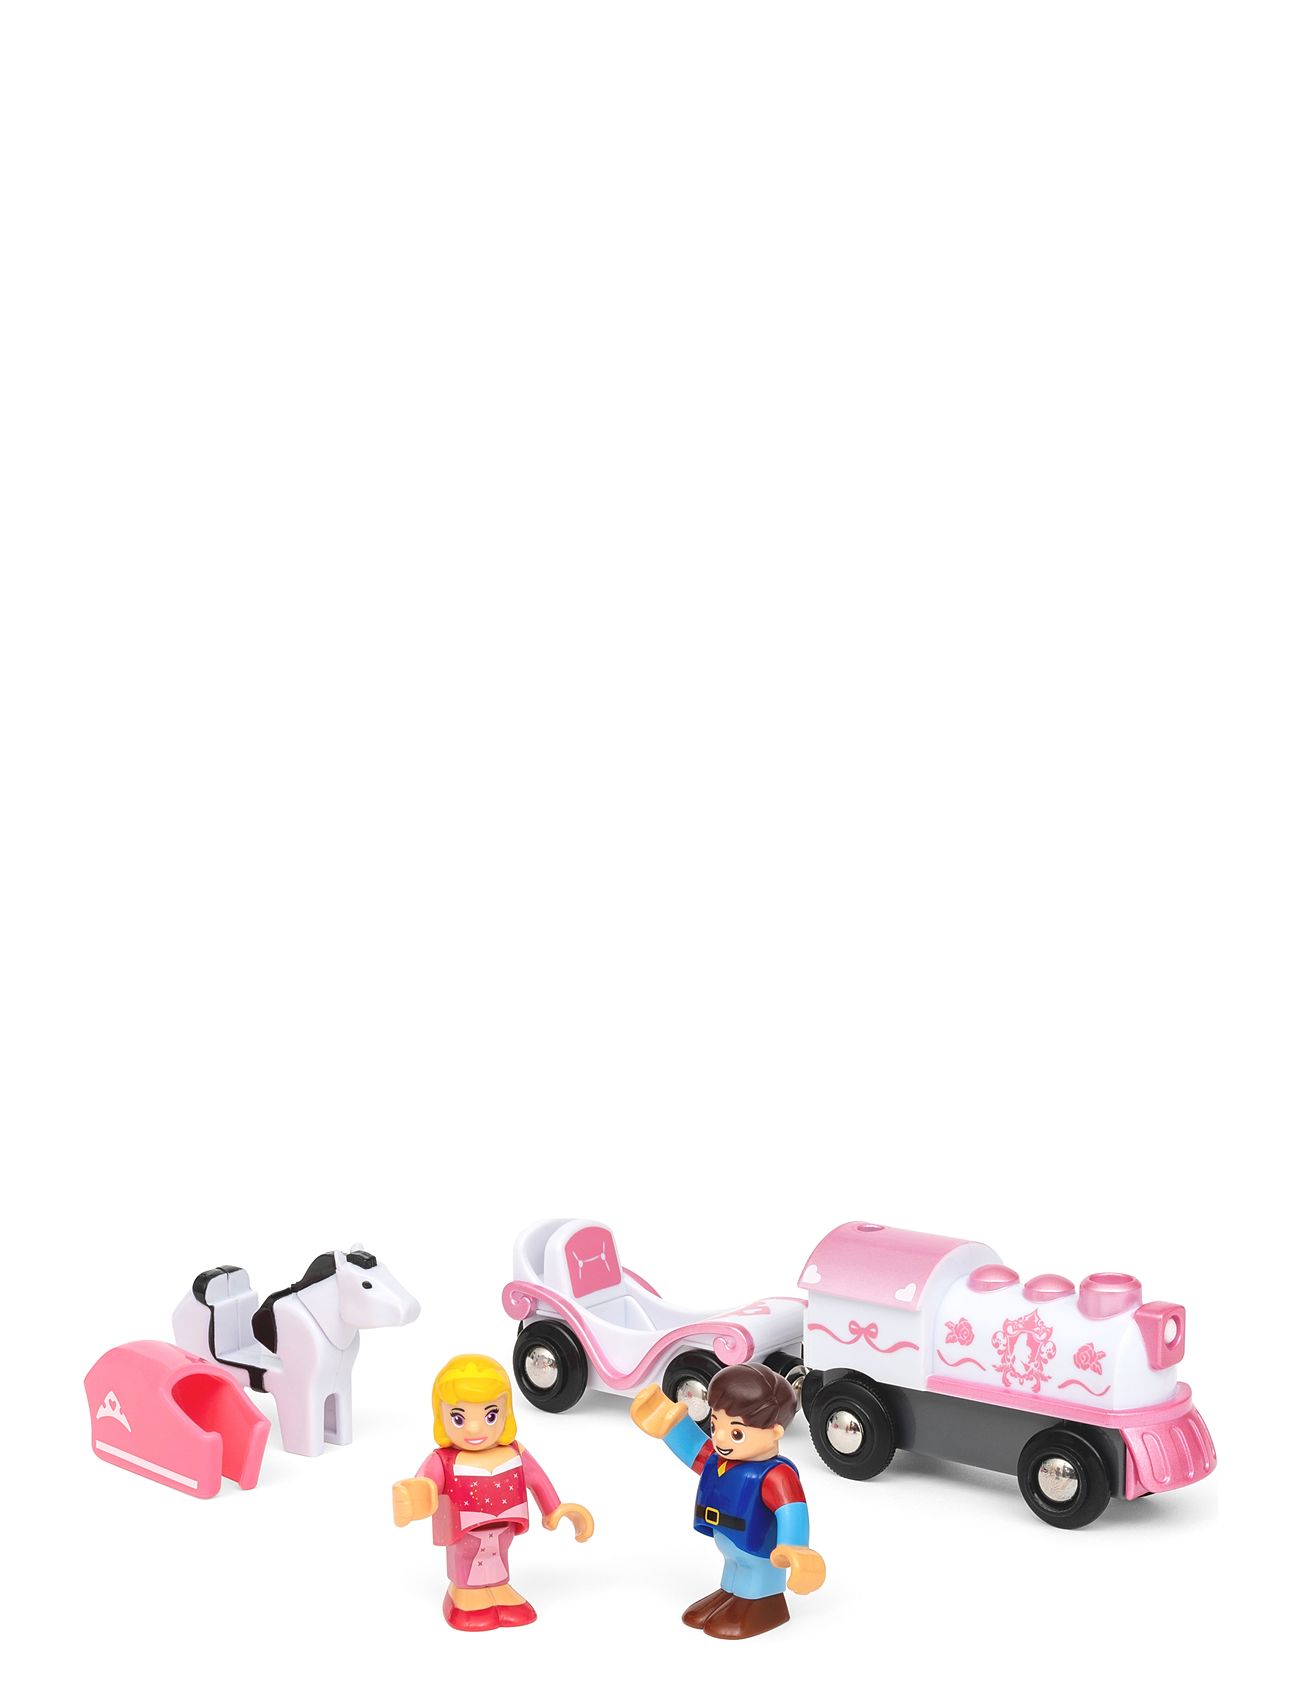 Brio 32257 Disney Princess Tornerose Batteritog Toys Toy Cars & Vehicles Toy Vehicles Trains Multi/patterned BRIO